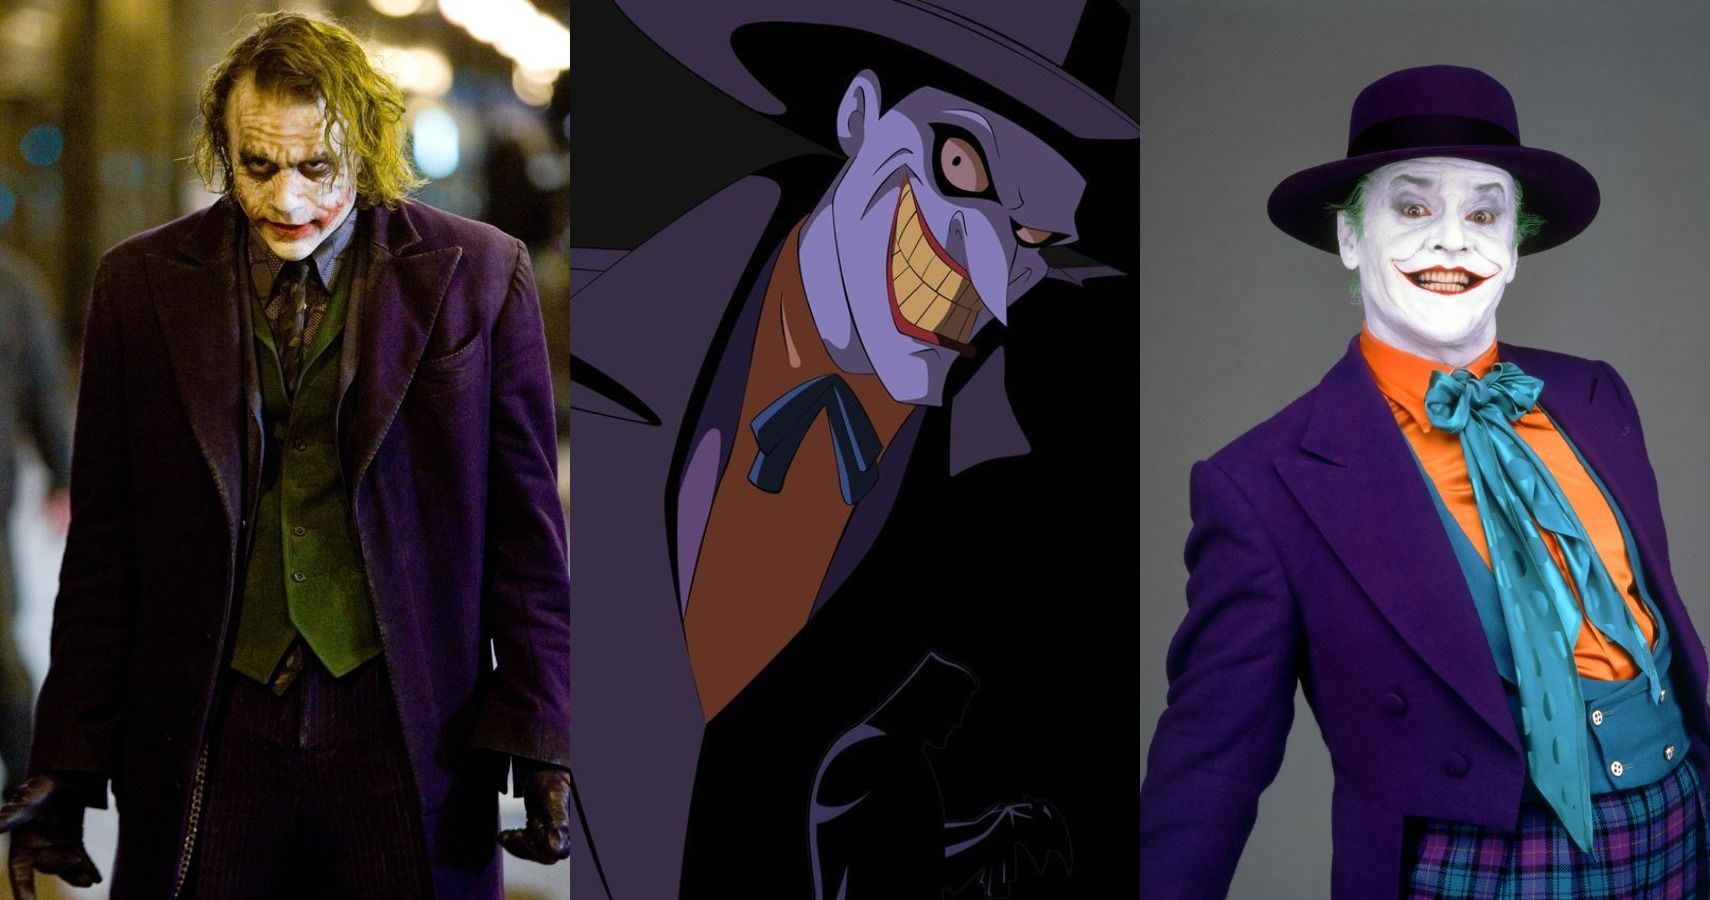 Heath Ledger's Joker, Mark Hamill Joker art by Loicm26, and Jack Nicholson's Joker